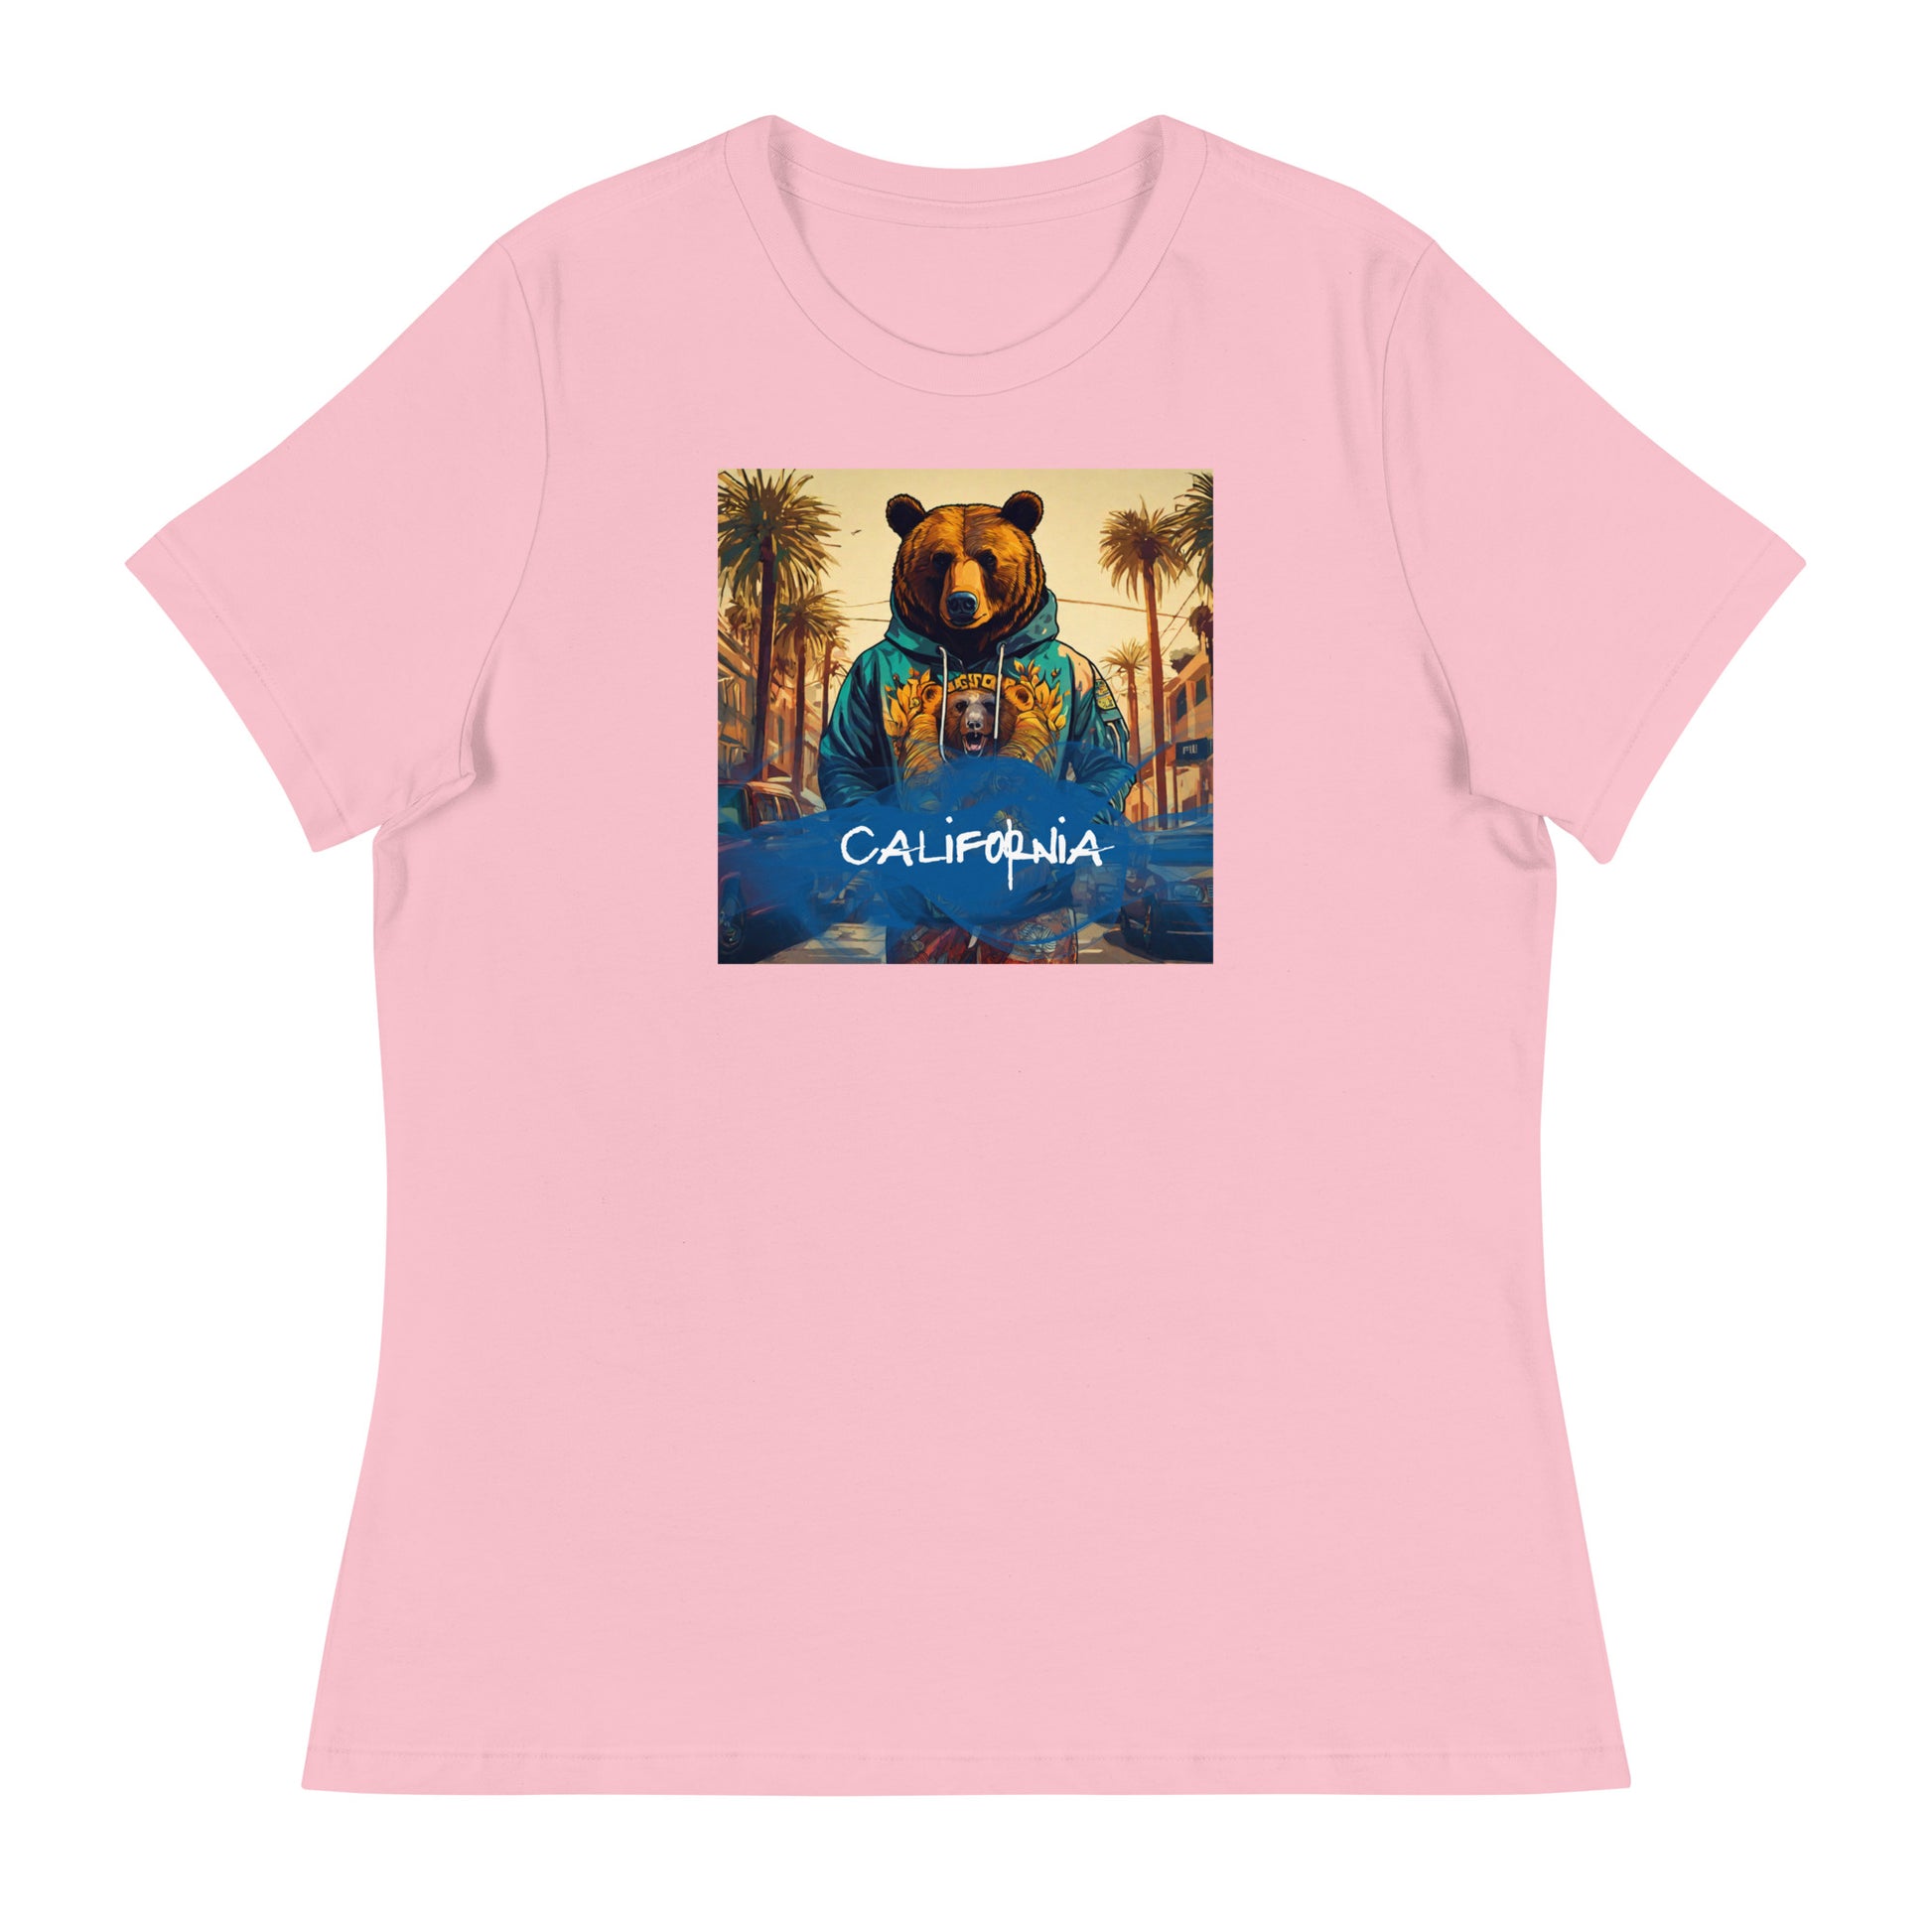 California Bear Women's T-Shirt Pink